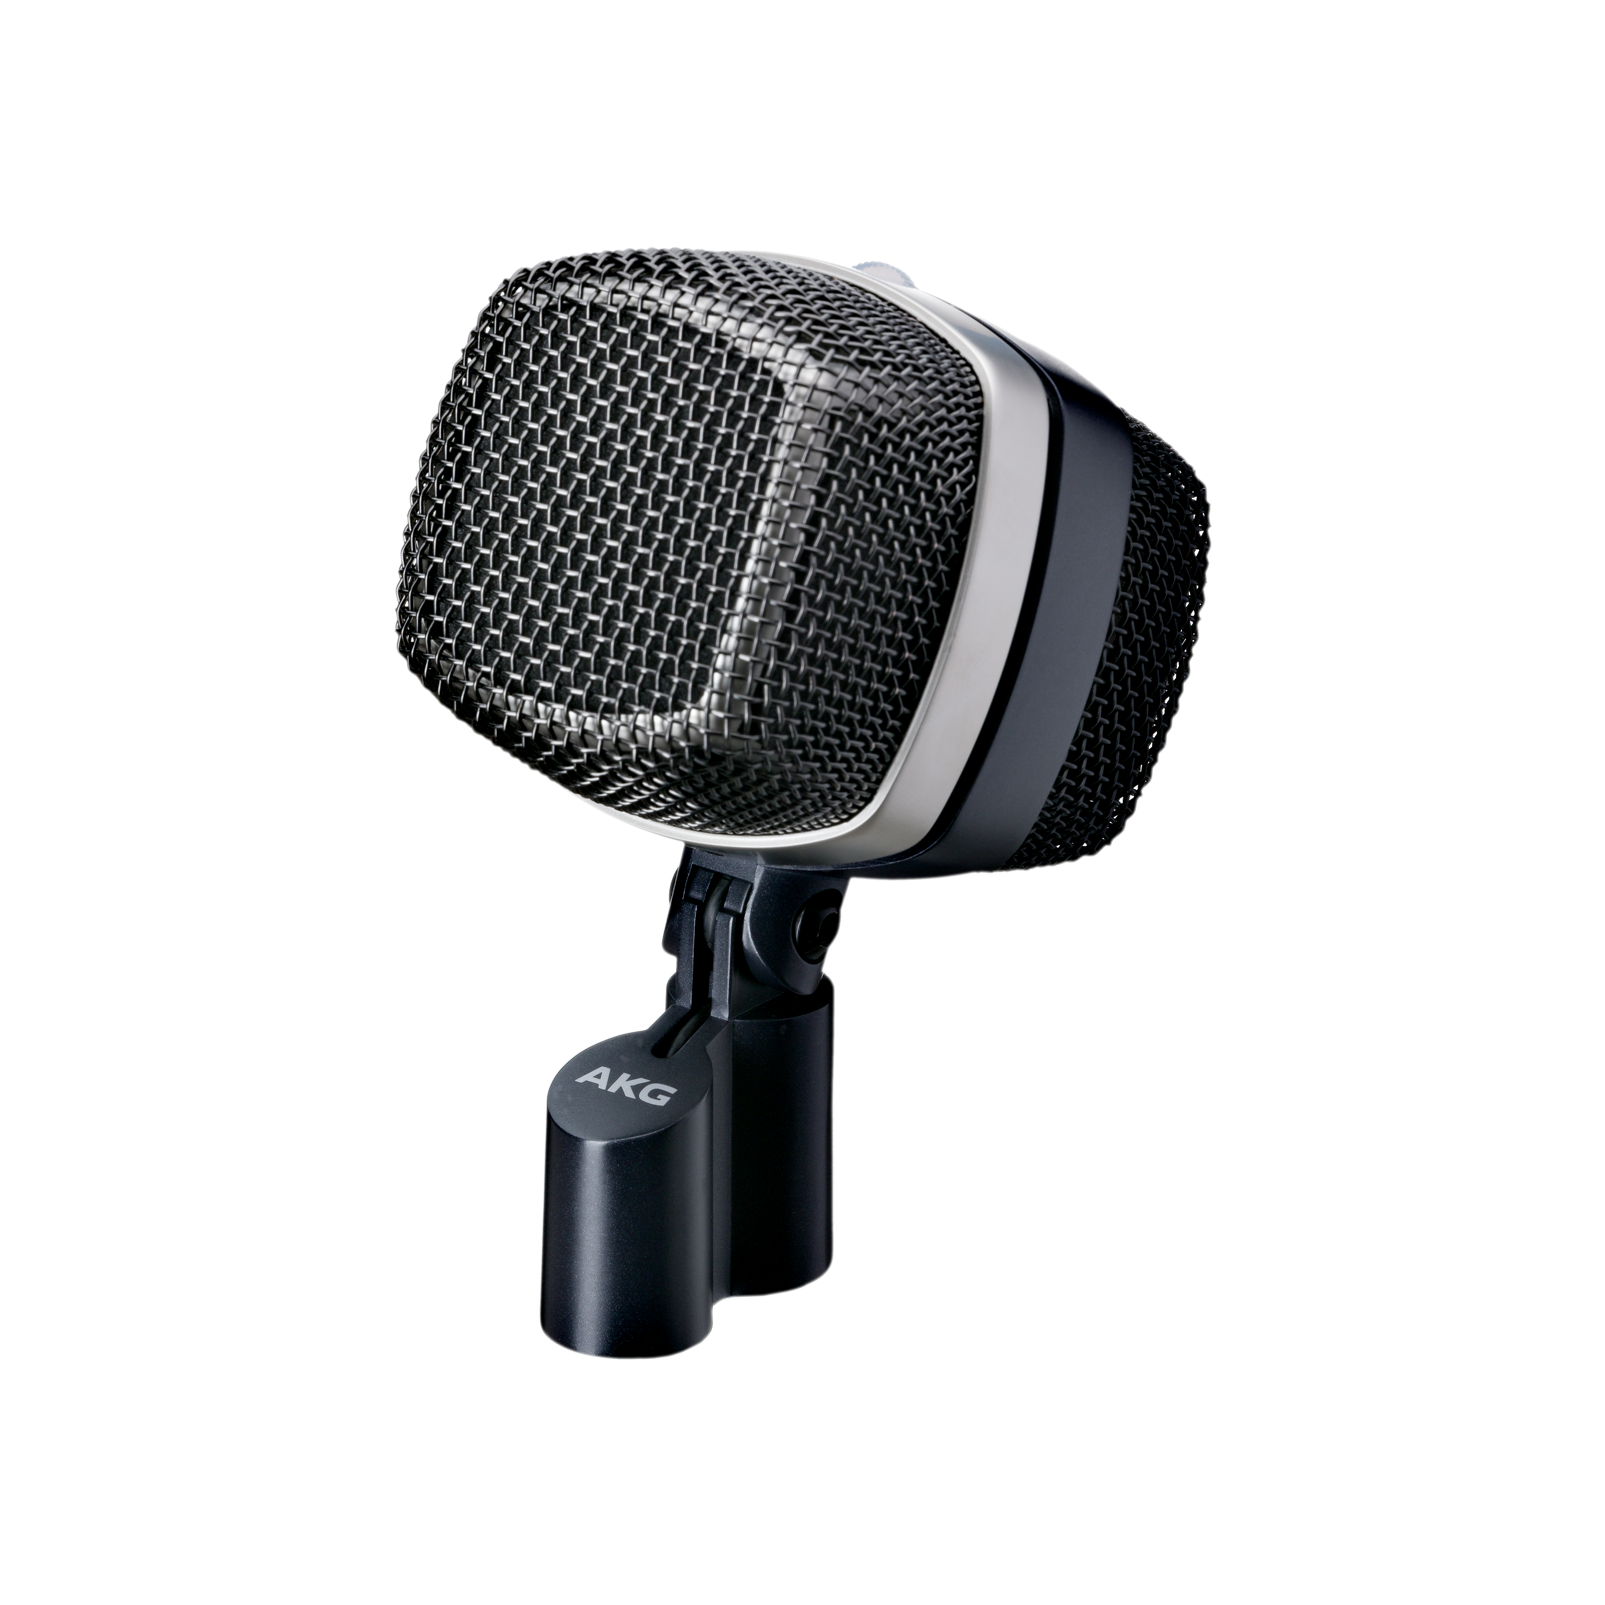 D12 VR (B-Stock) - Black - Reference large-diaphragm dynamic microphone - Hero